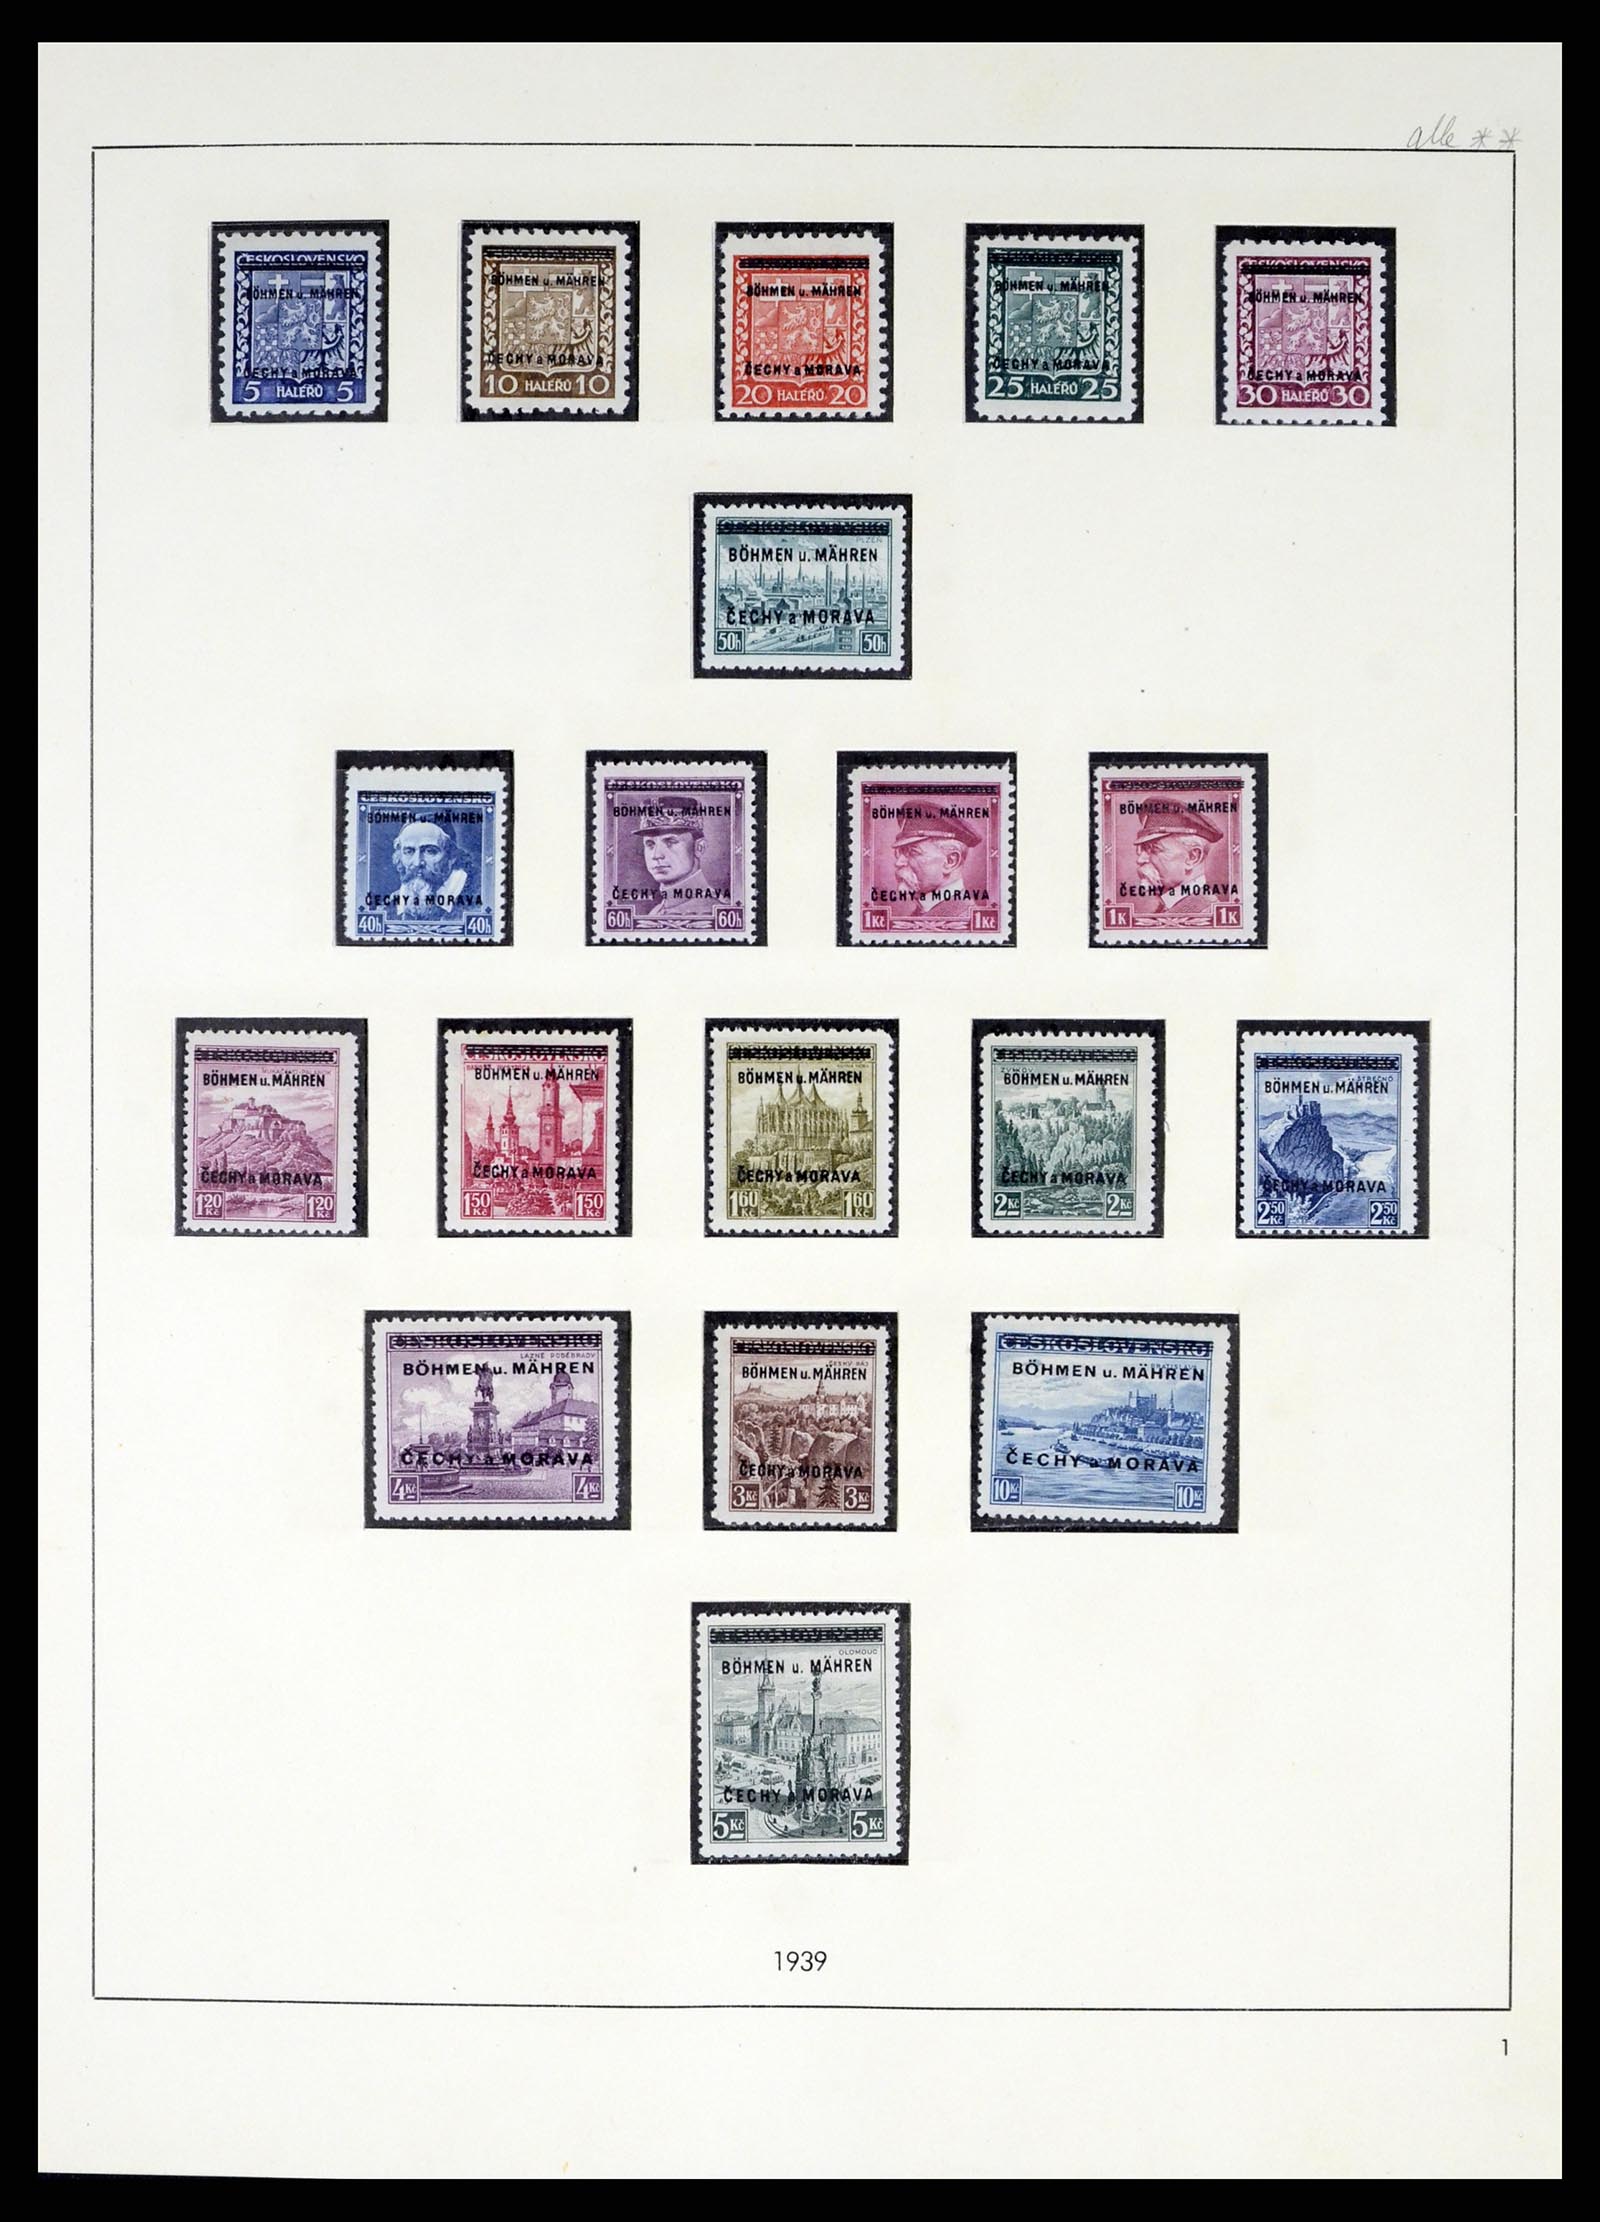 37535 001 - Stamp collection 37535 German occupation second worldwar 1939-1945.